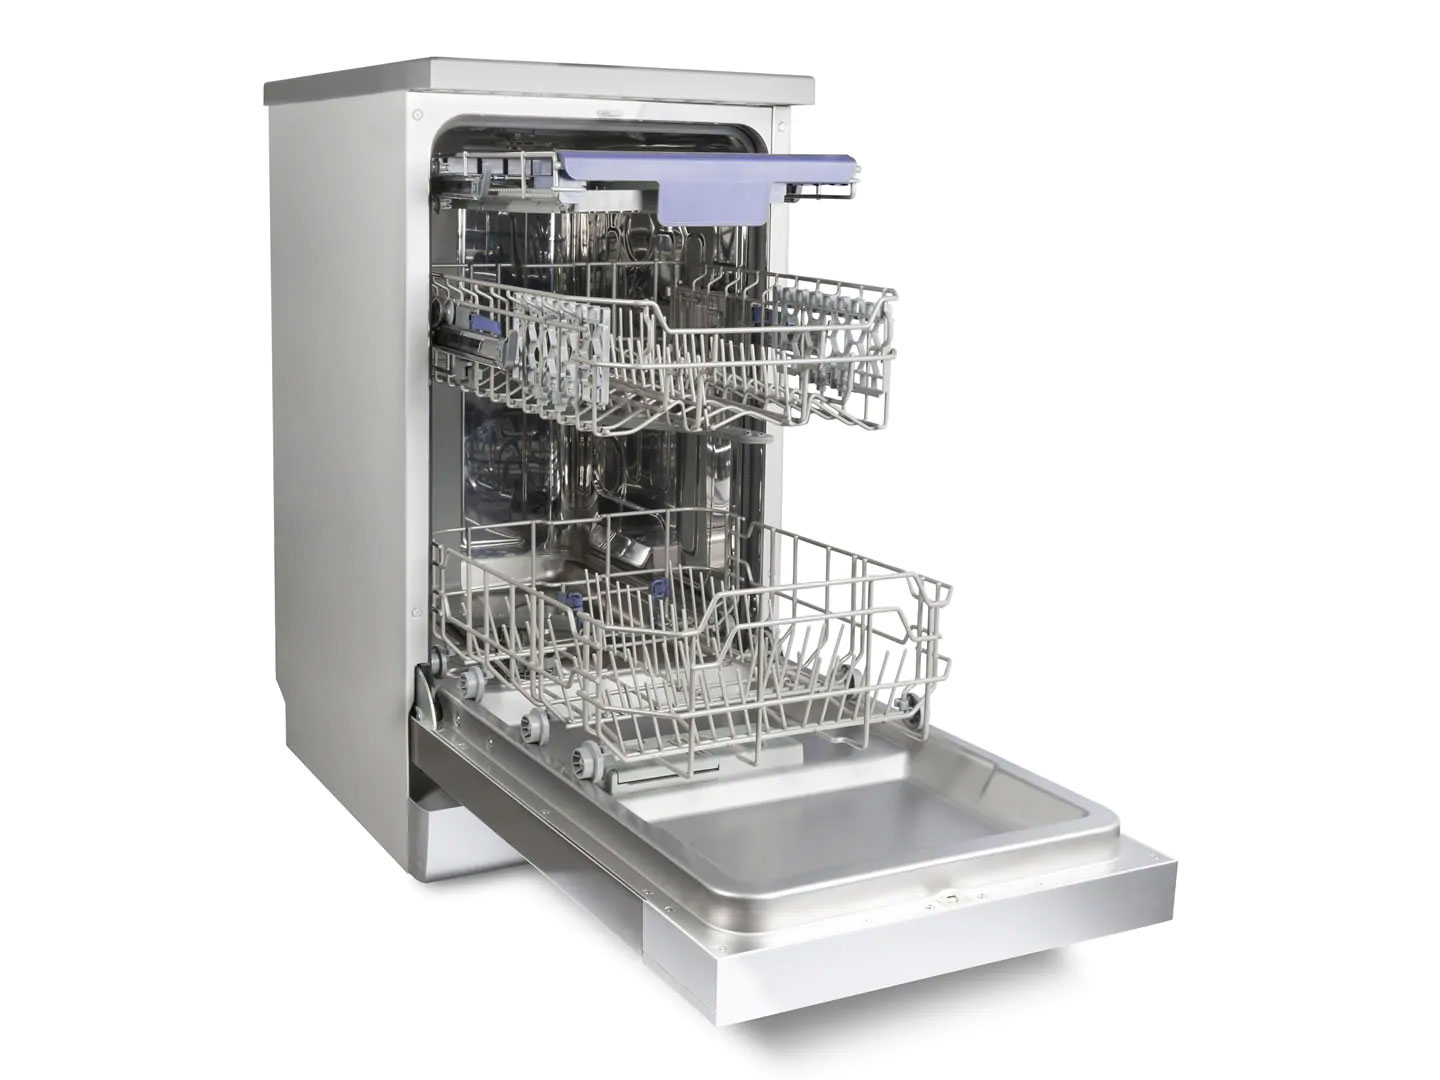 delonghi dedw6015s freestanding dishwasher